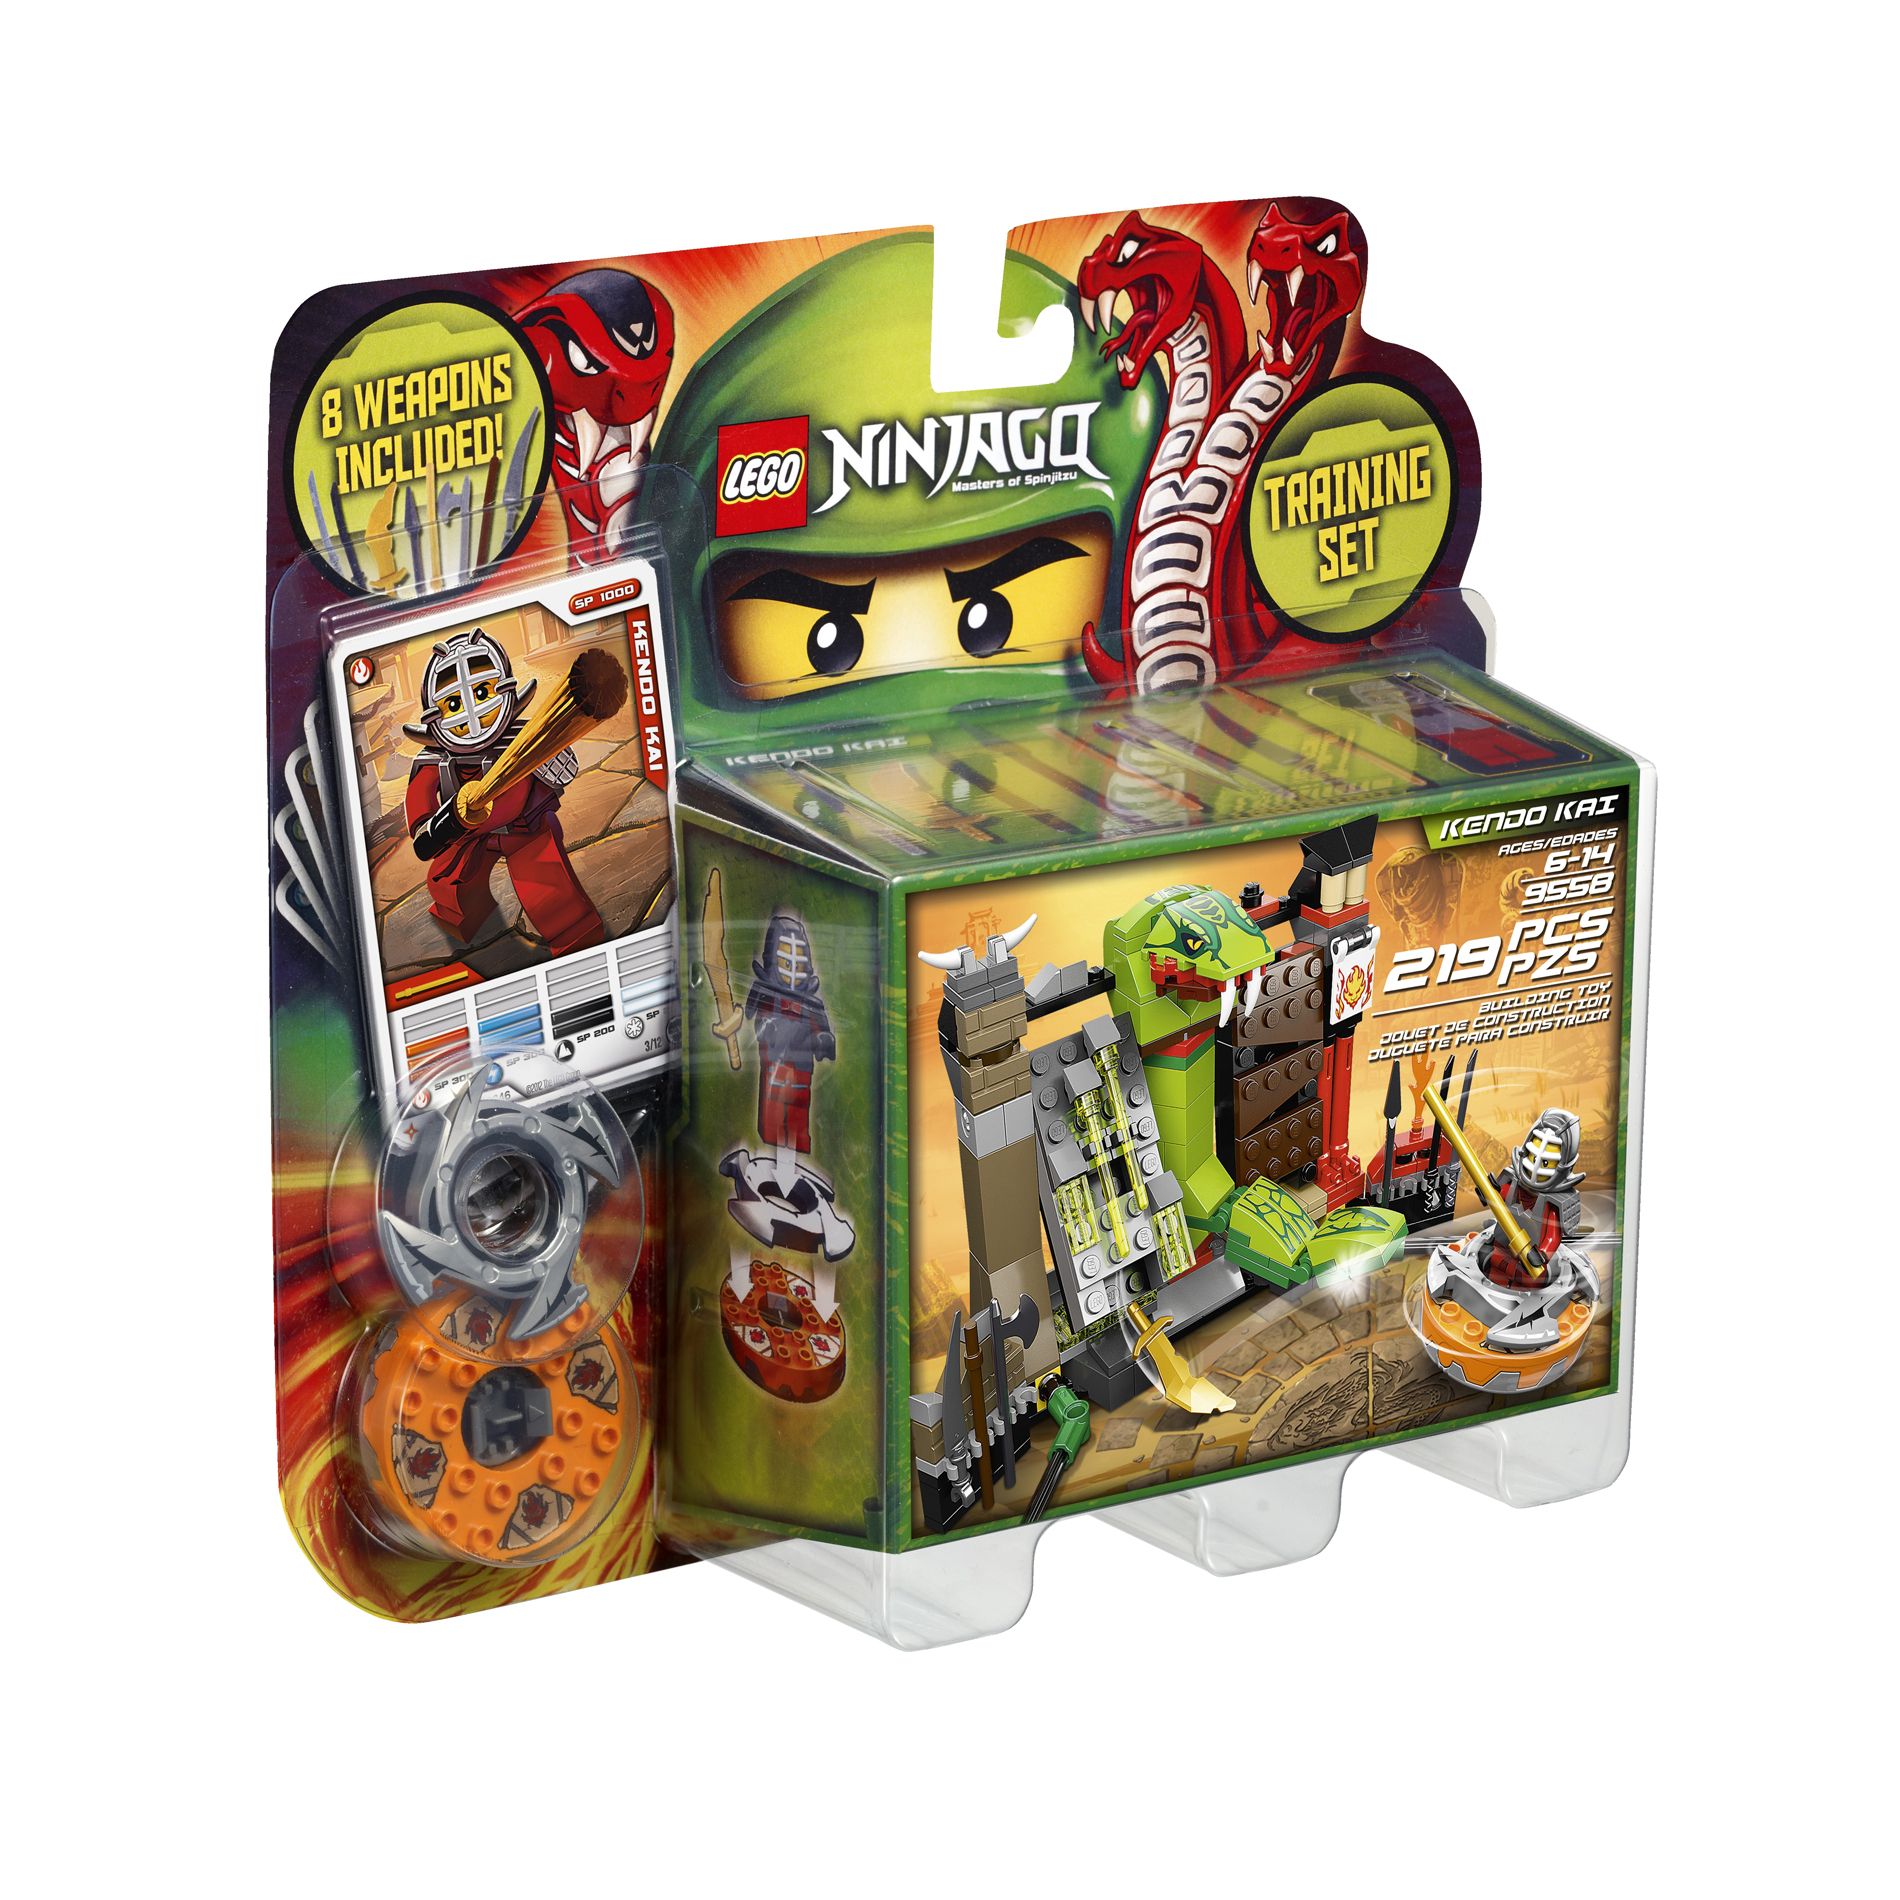 Lego Ninjago Training Set: Take on a Giant Snake with Kmart